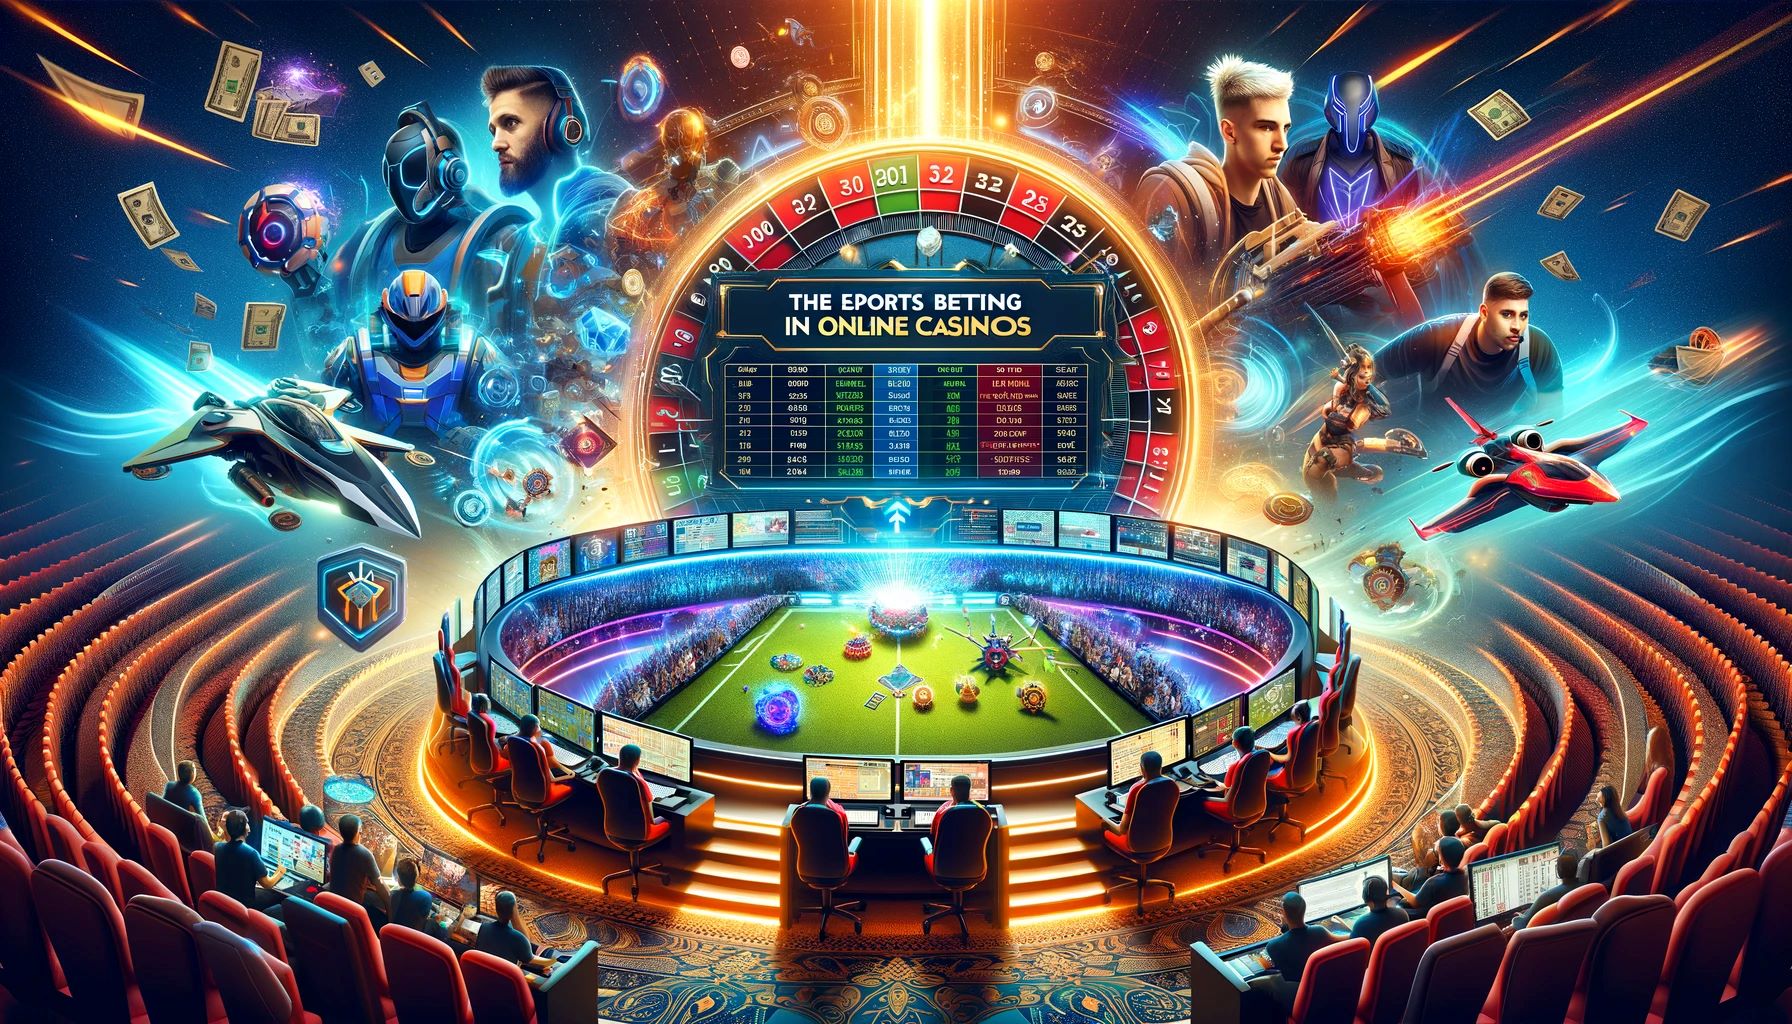 eSports betting in online casinos